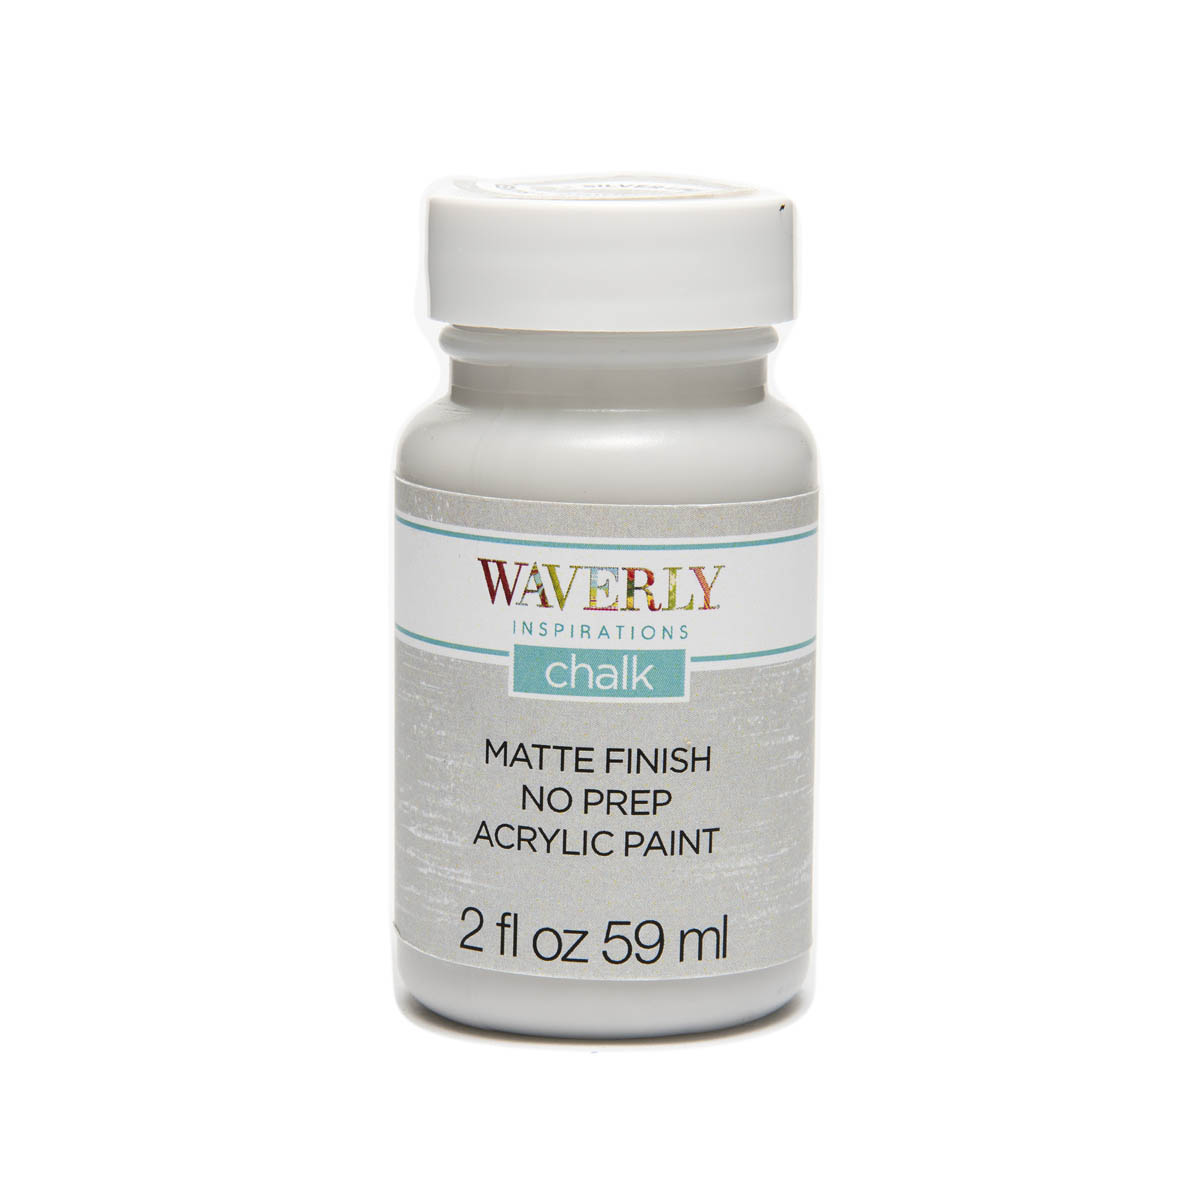 Waverly ® Inspirations Chalk Finish Acrylic Paint - Silver Lining, 2 oz. - 60895E